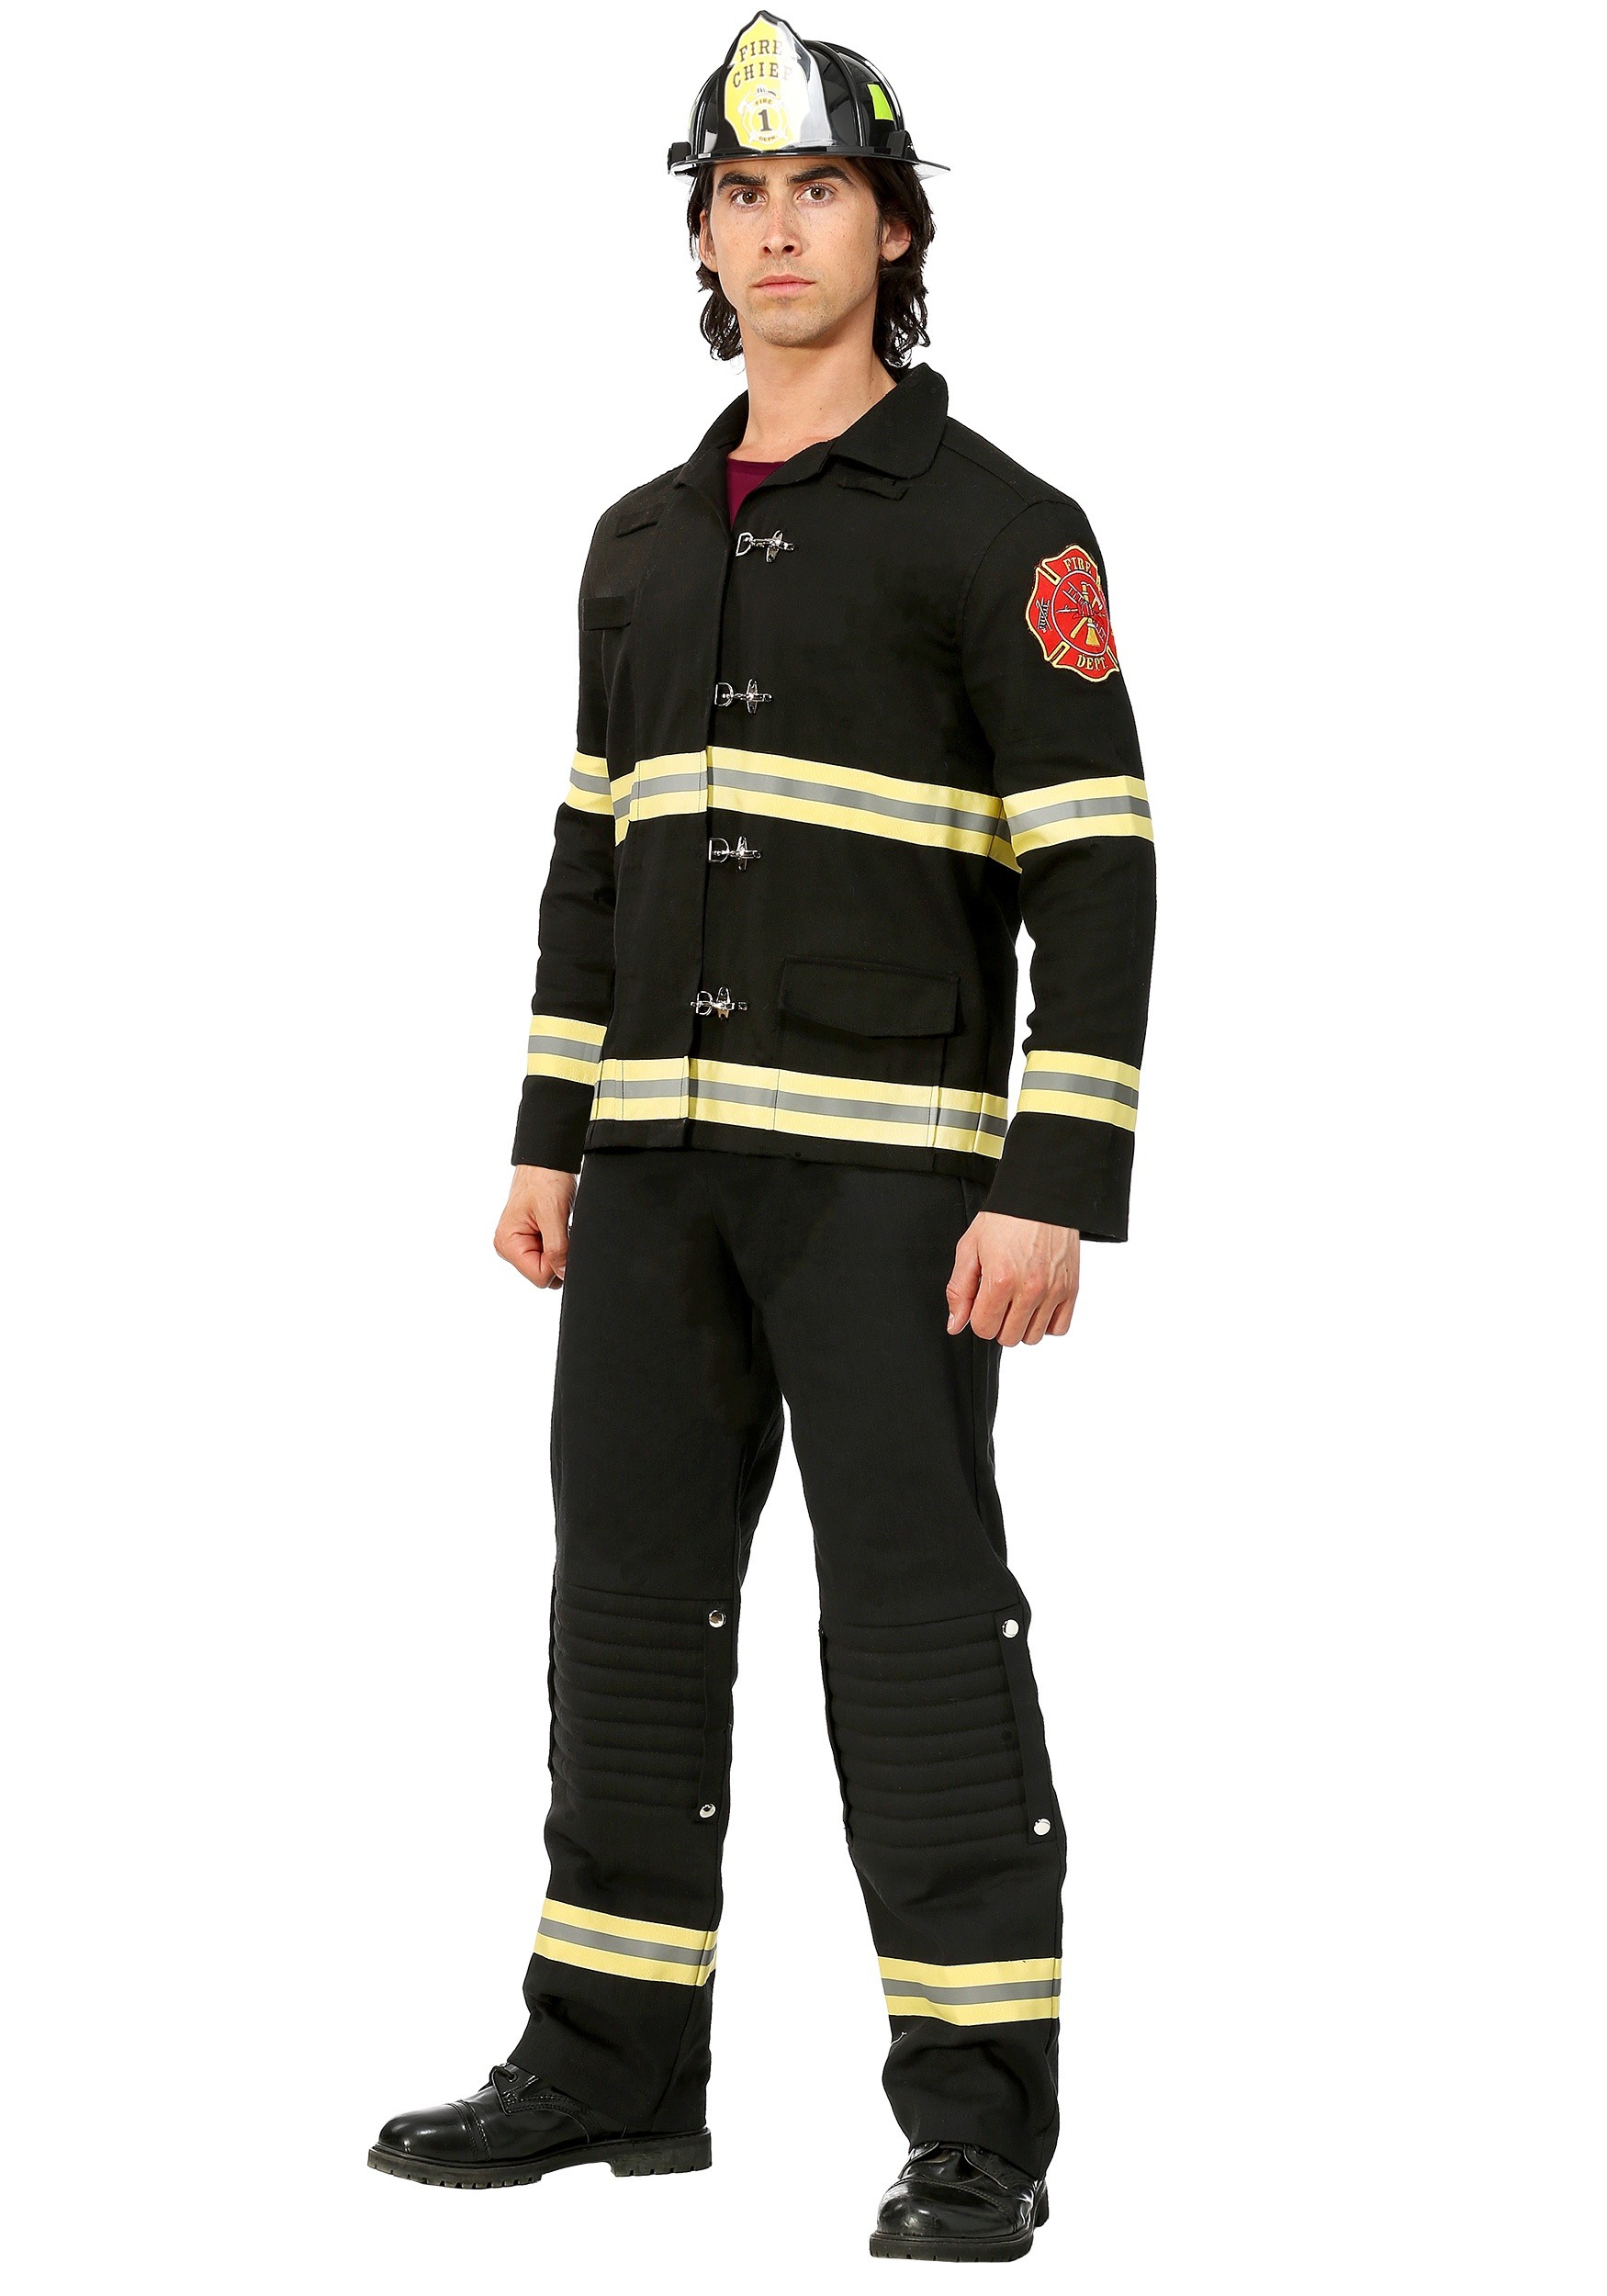 Photos - Fancy Dress FUN Costumes Black Uniform Firefighter Costume for Men Black/Yellow